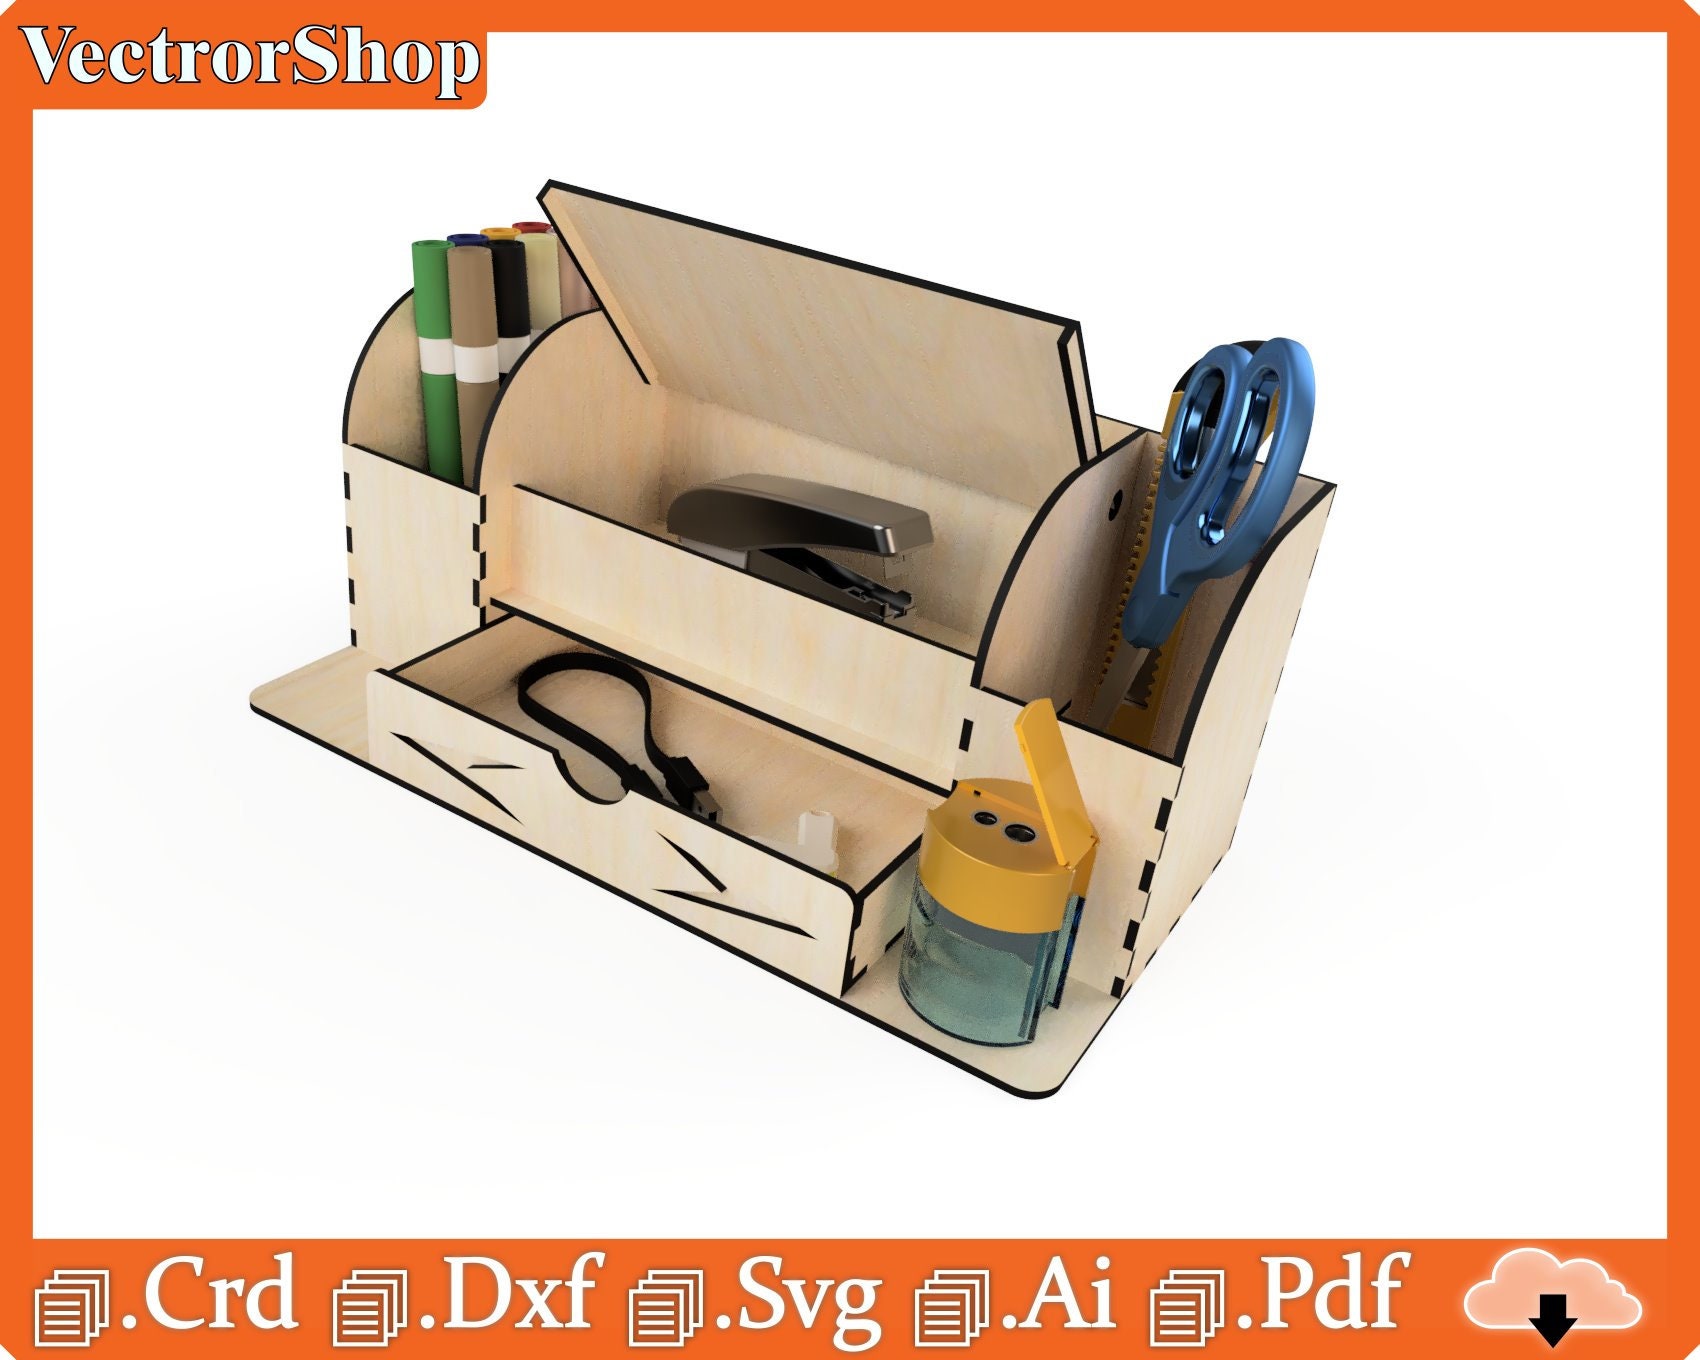 Laser Cut City Desk Organizer Model Storage Rack Pen Holder and Drawer Plan  Wooden 3 Mm SVG DXF CDR Ai Pdf Files 